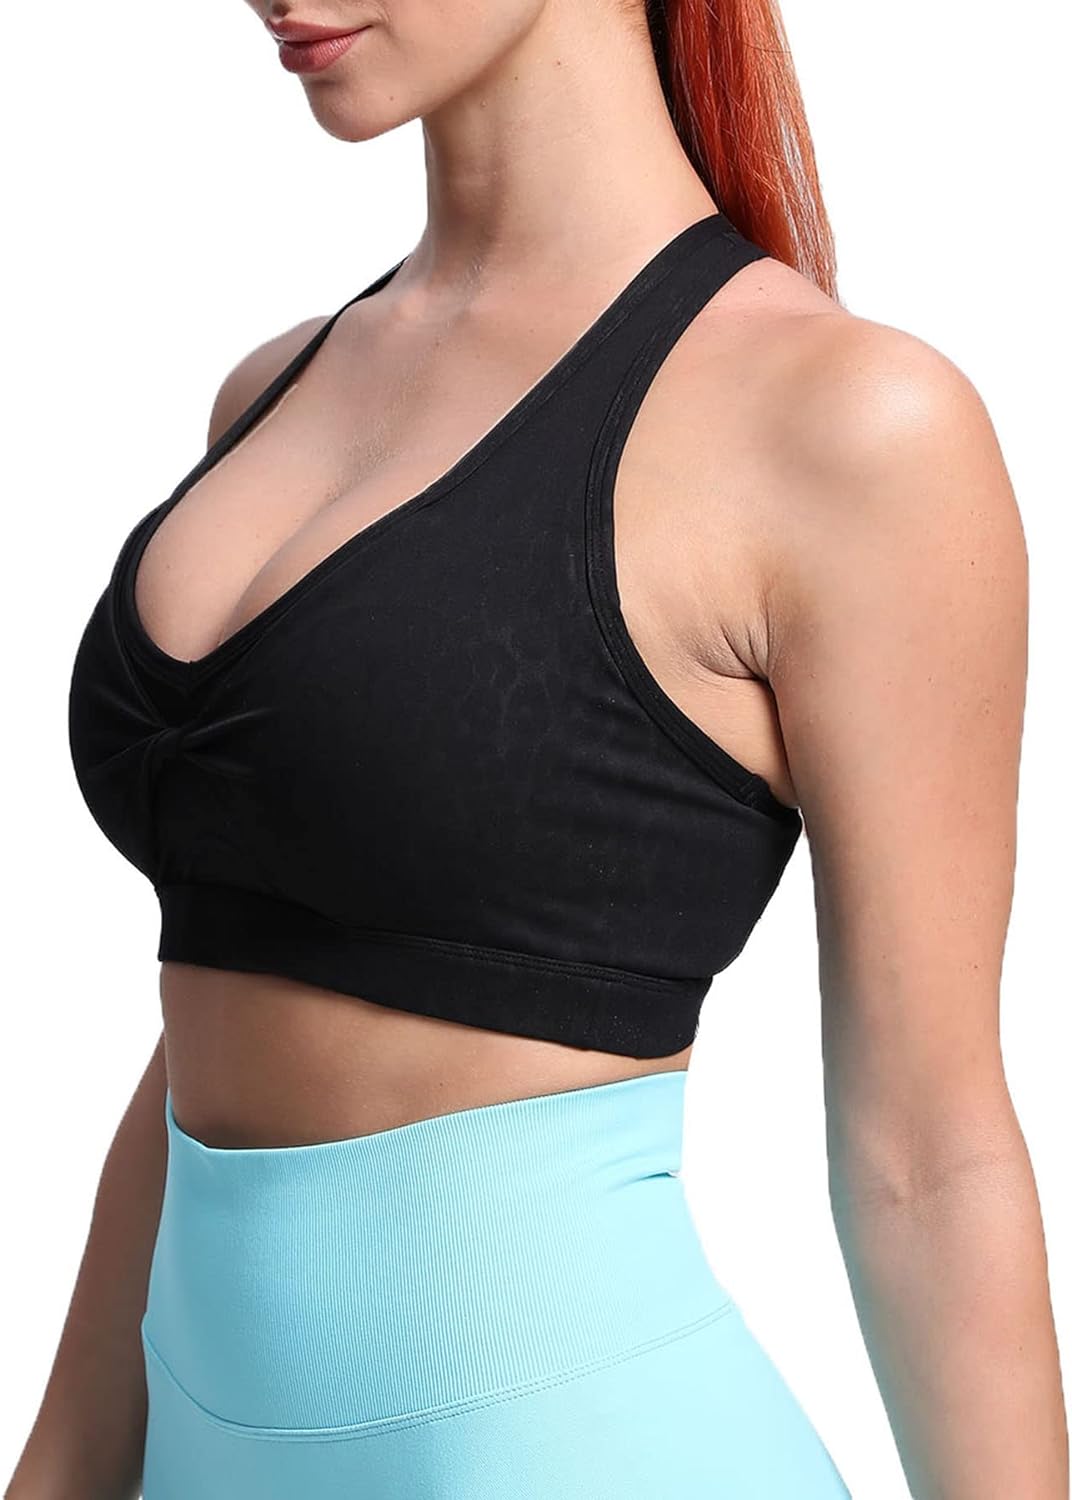 Aoxjox Twist Sports Bras for Women Workout Fitness Training Elegance V Neck Racerback Yoga Crop Tank Top